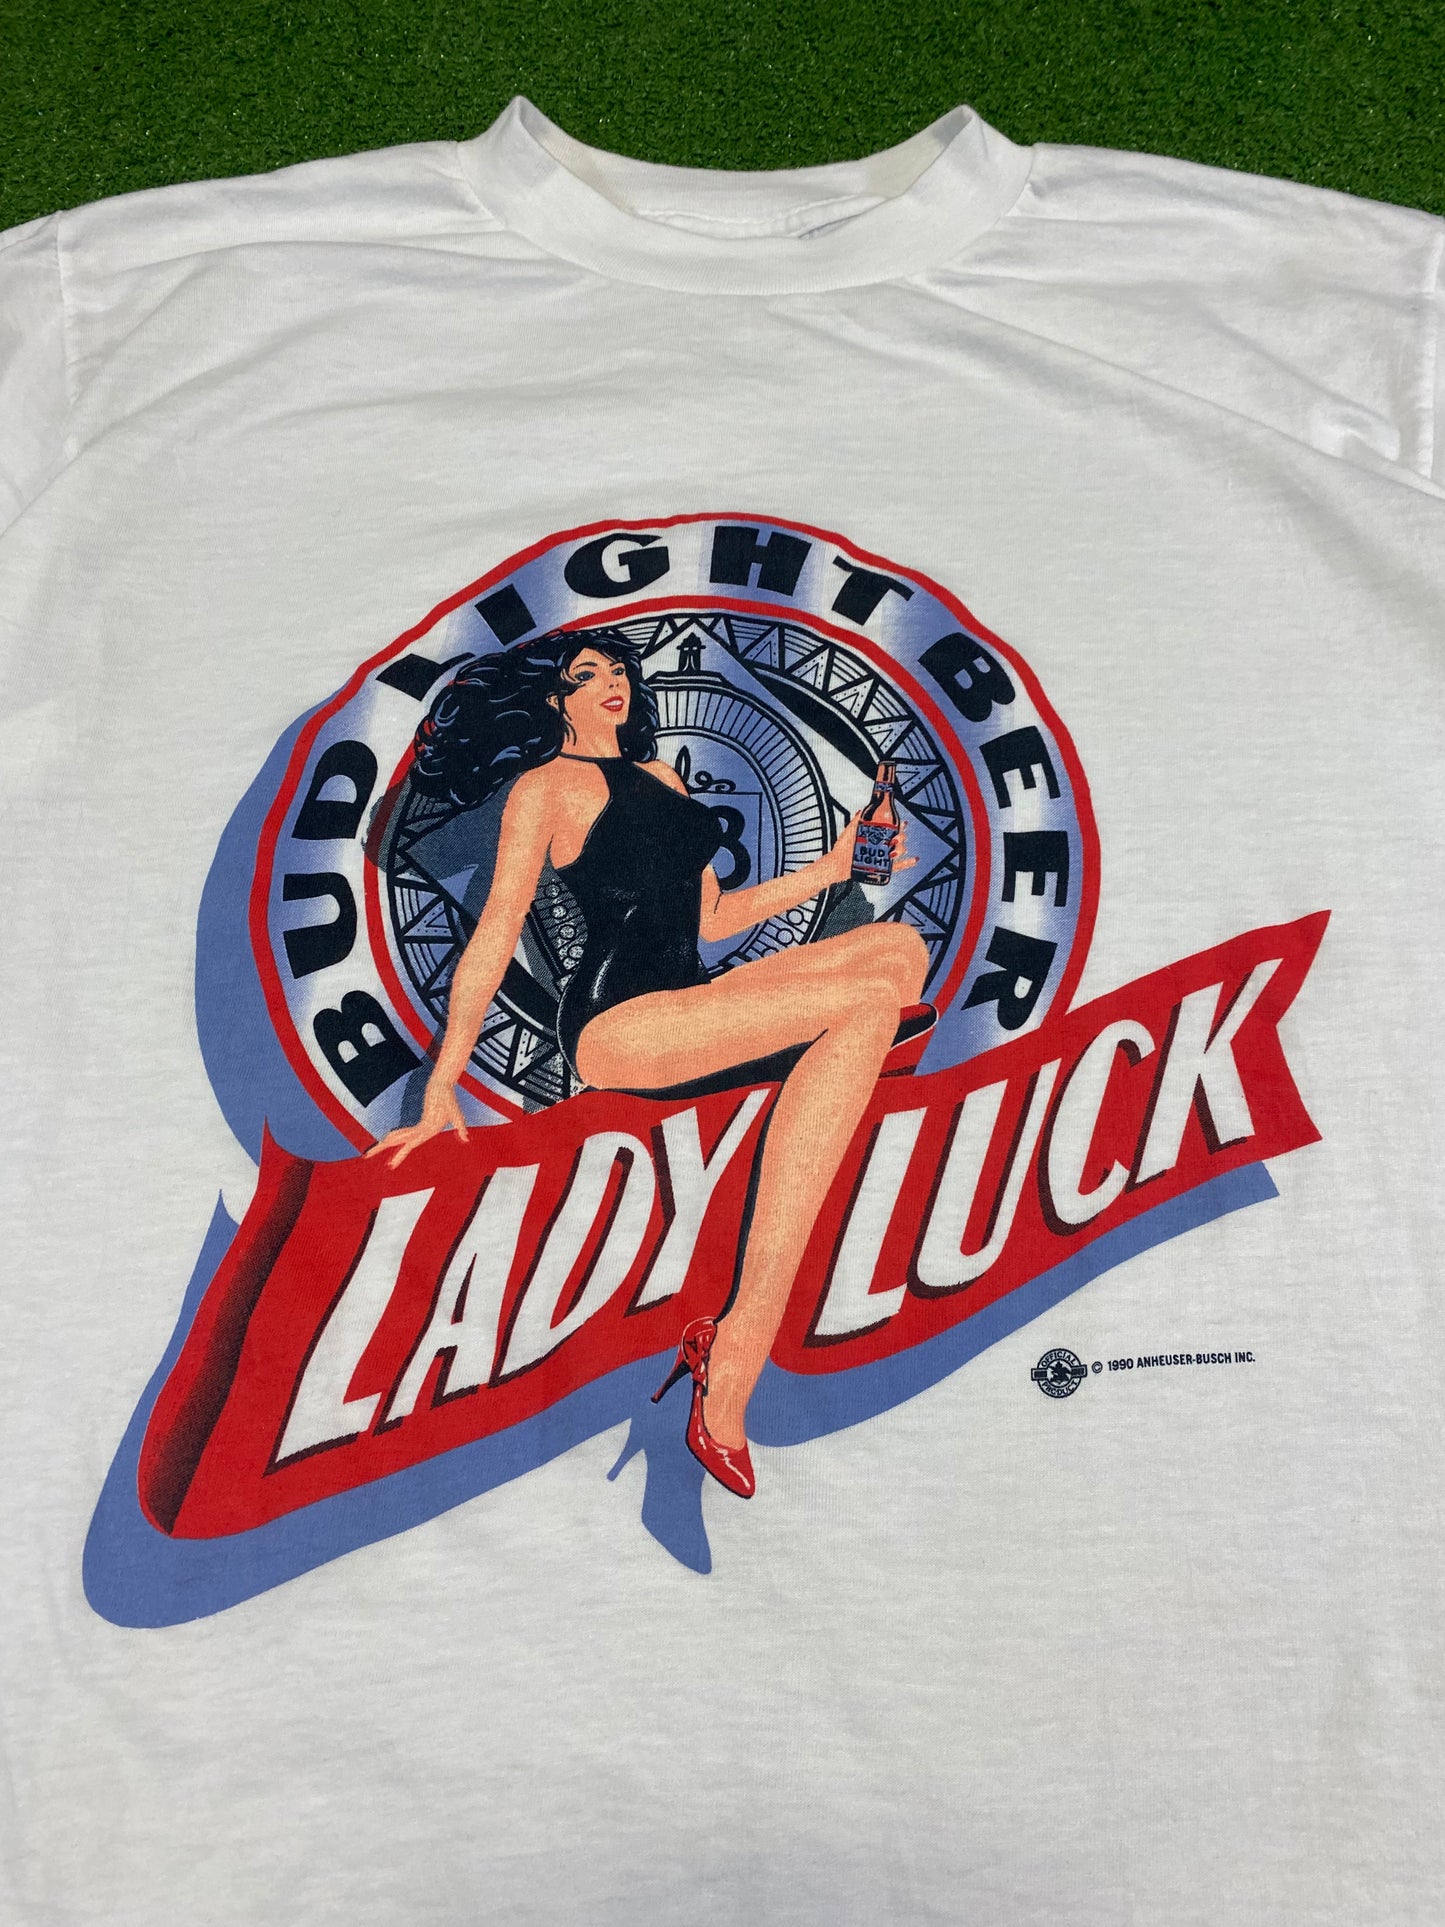 1990 Bud Light Lady Luck Beer T-Shirt XL